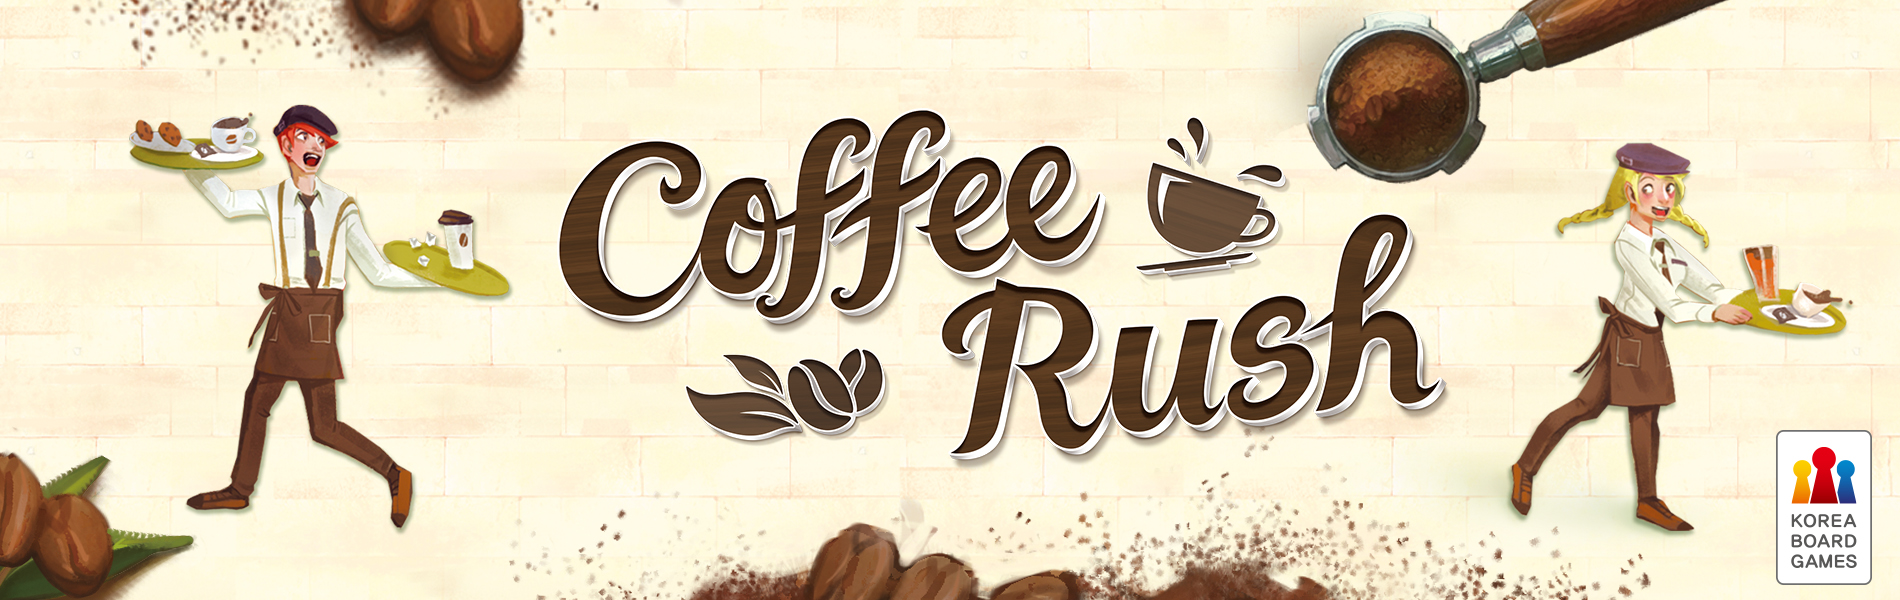 Coffee Rush - Jan 12